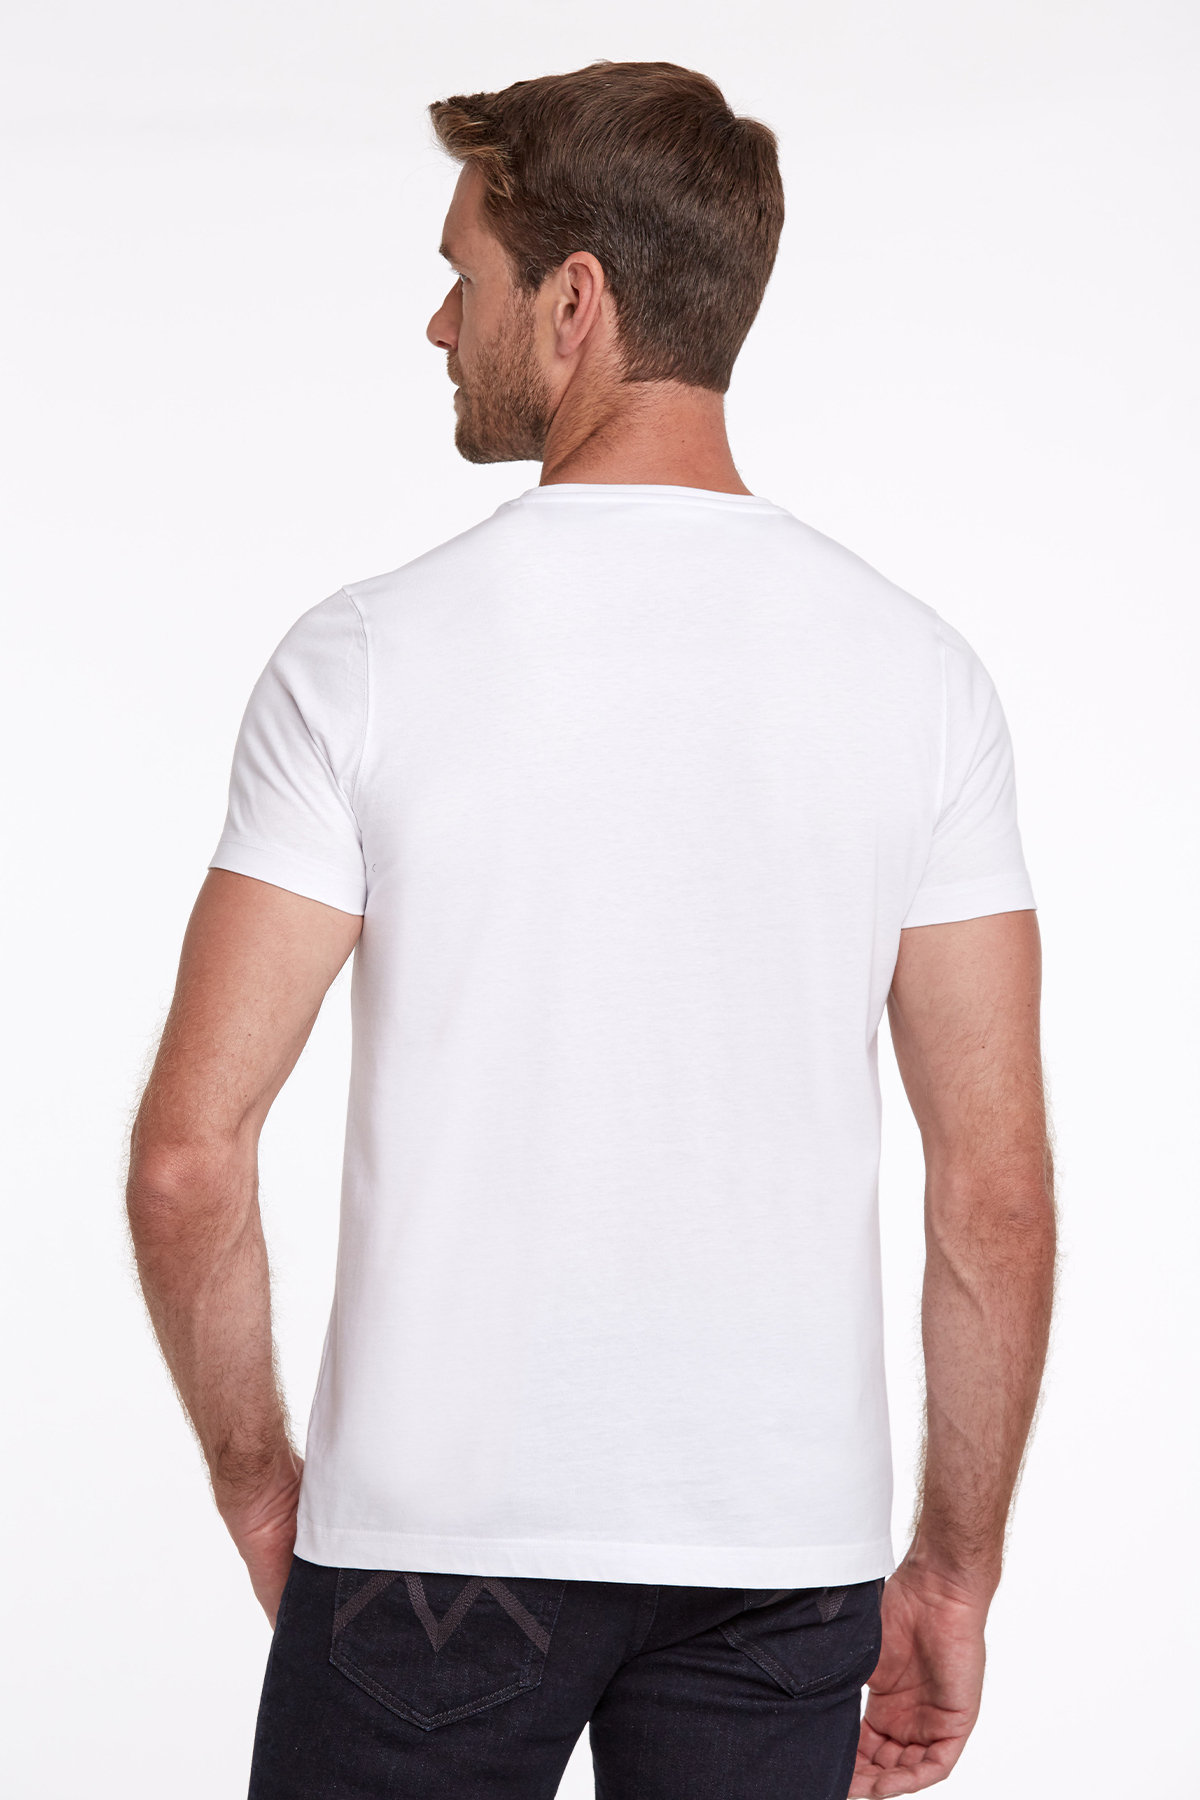 Logo Baskılı Kırık Beyaz Bisiklet Yaka Pamuk T-Shirt